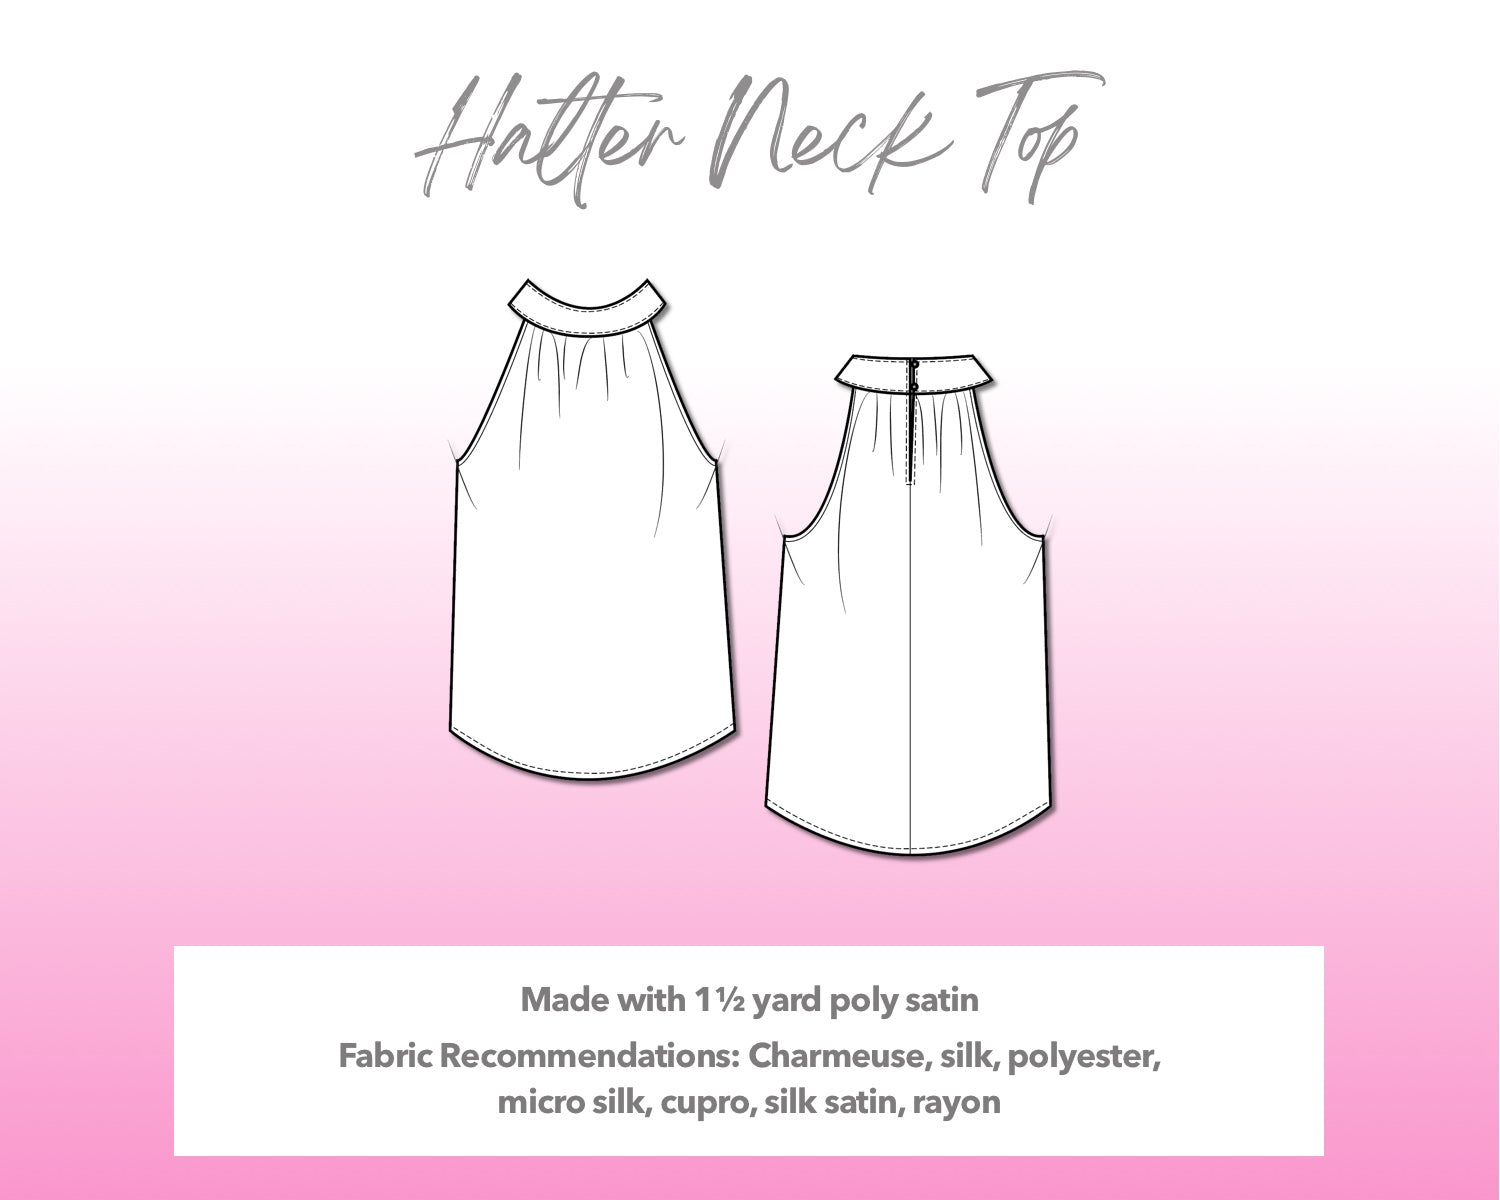 Illustration and detailed description for Halter Neck Top sewing pattern.